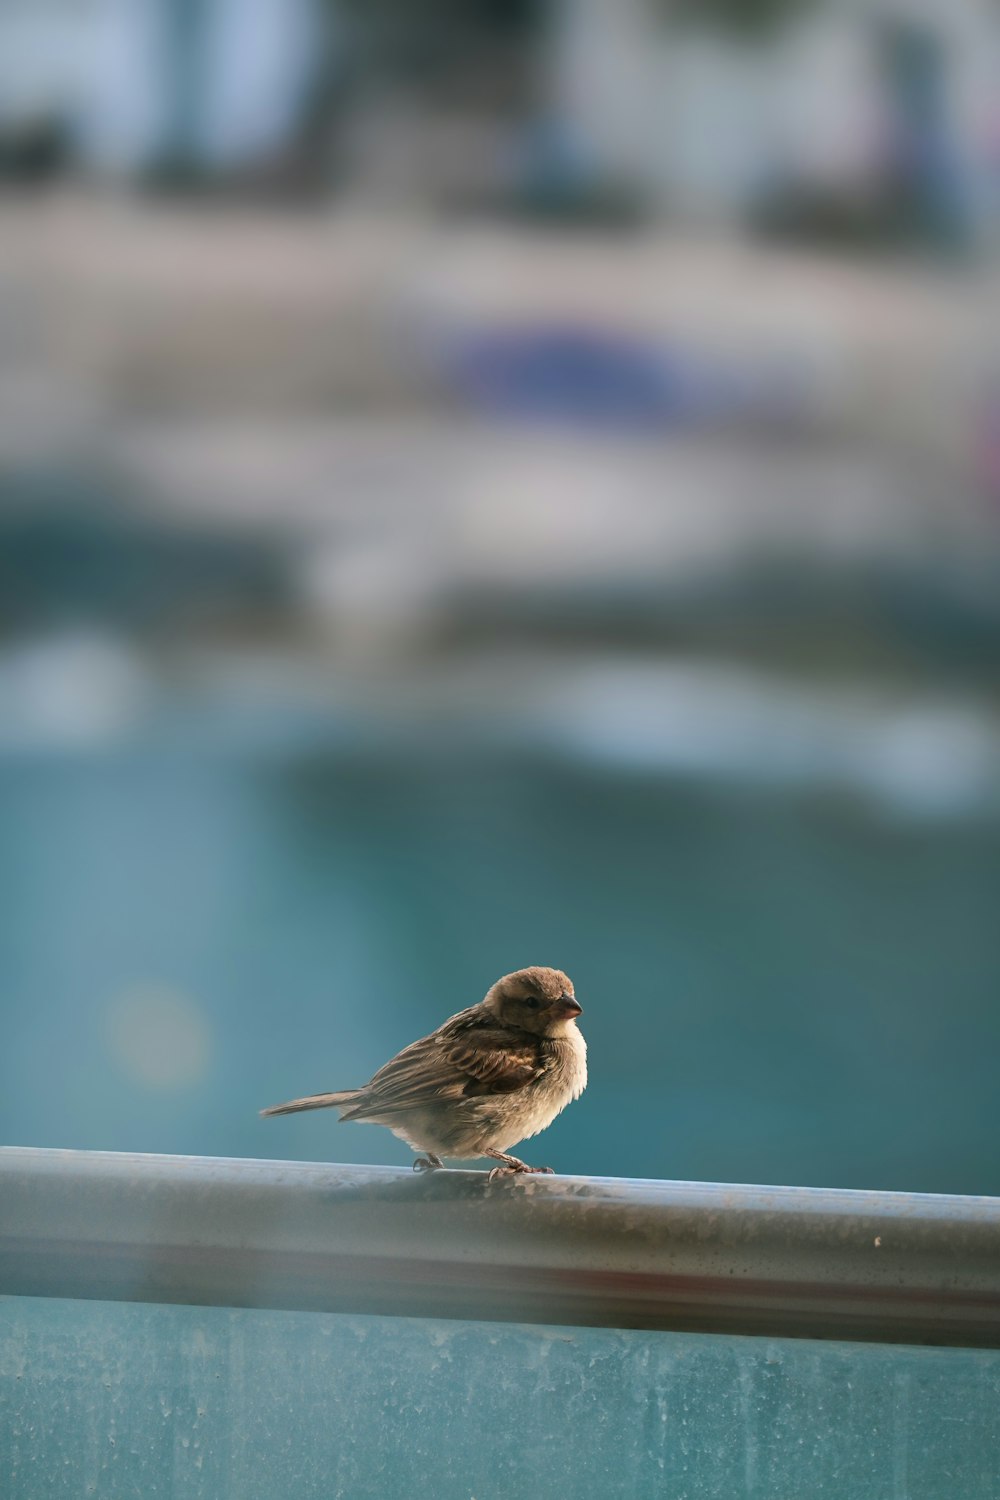 a small brown bird sitting on a railing